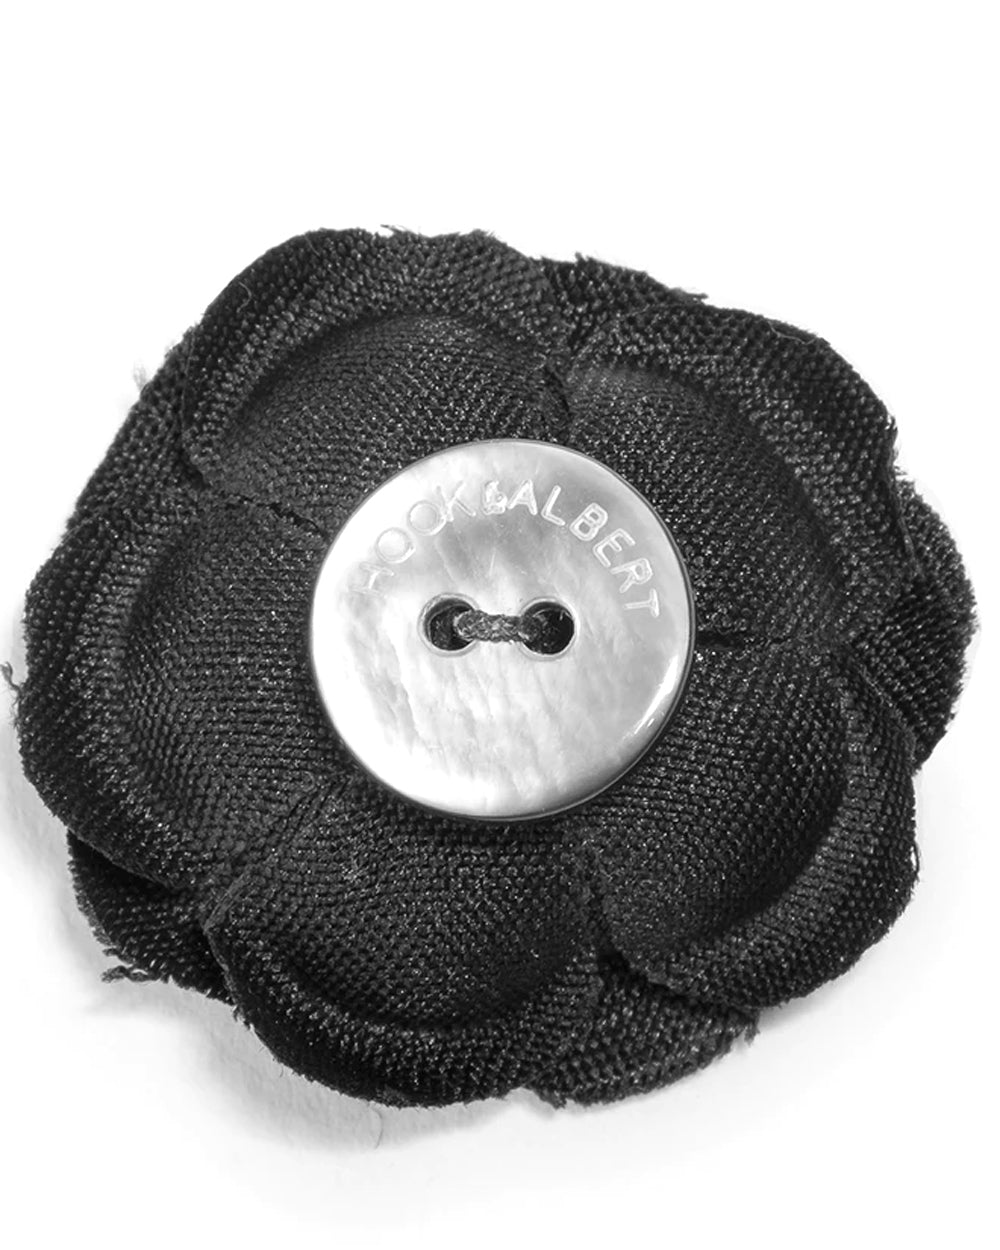 Small Buttercup Lapel Flower in Black